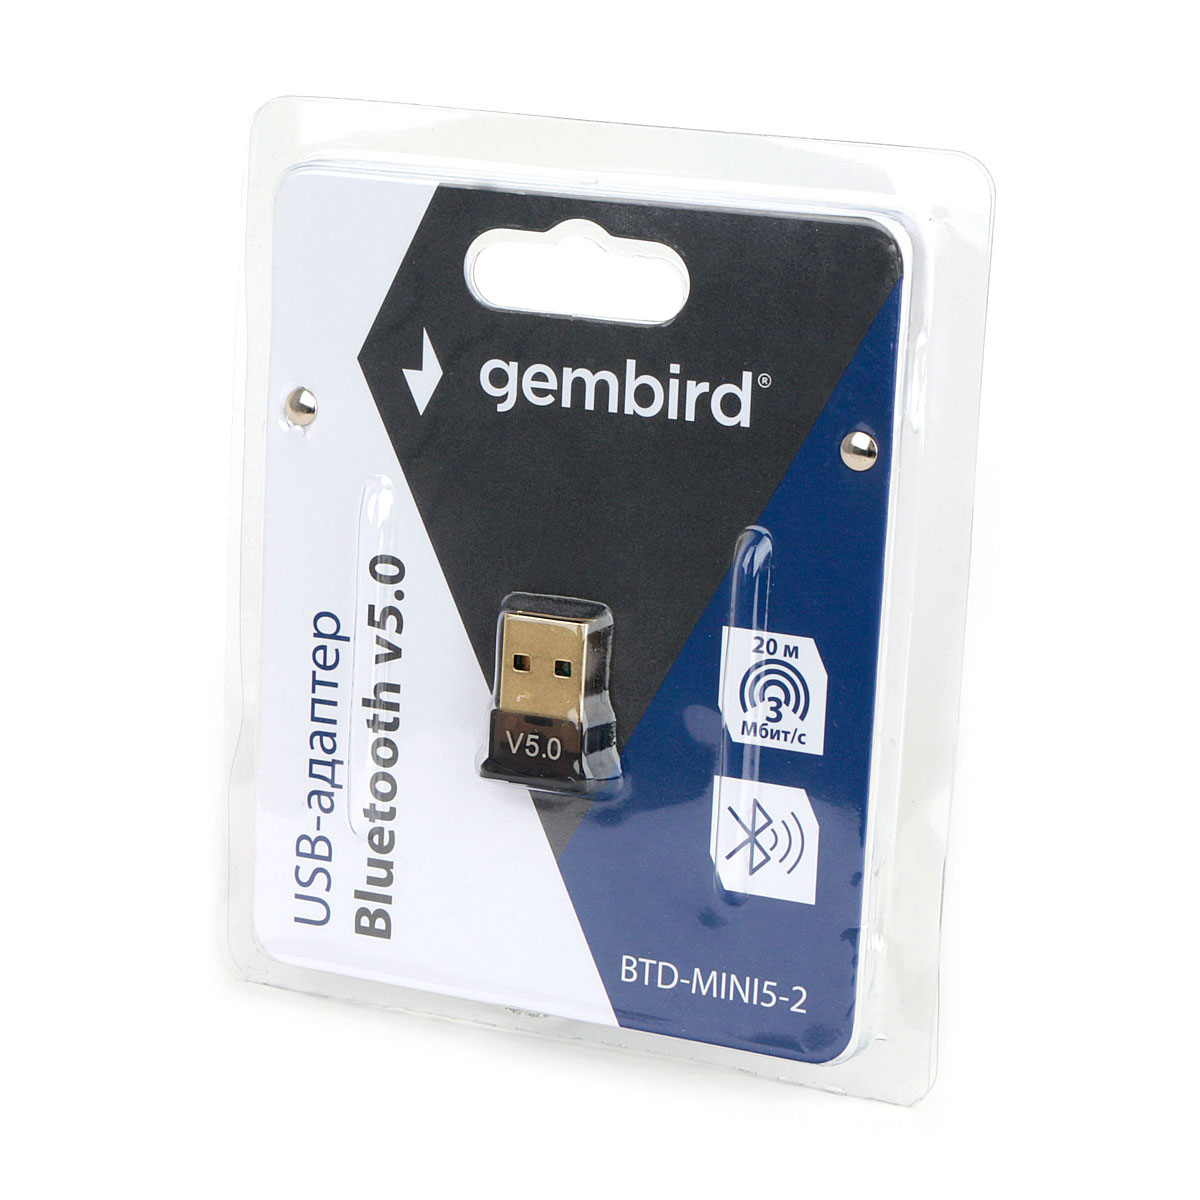  Bluetooth Gembird BTD-MINI5-2